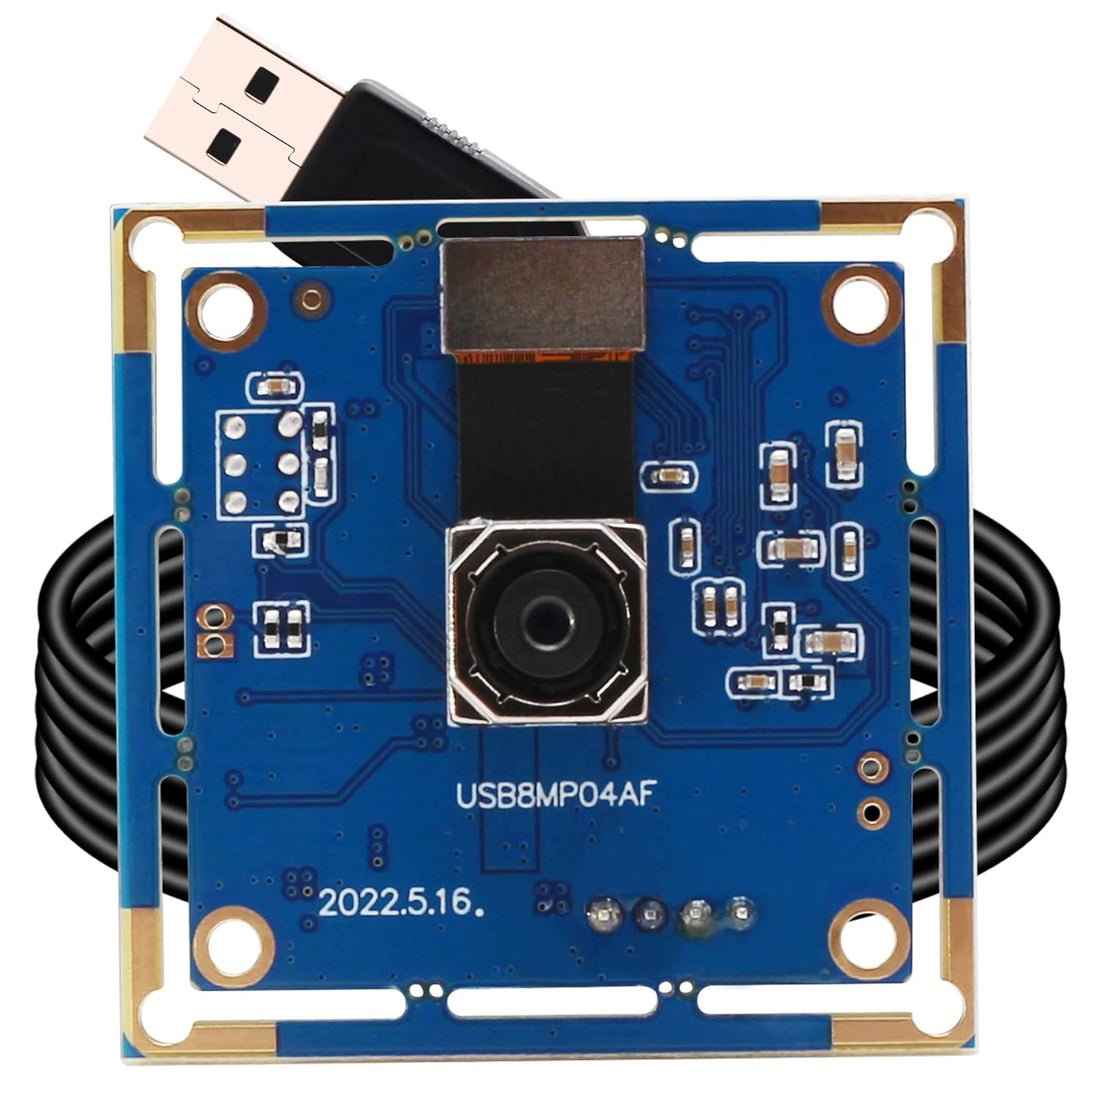 CODSOK 8MP USB Camera Module IMX179 Autofocus Plug&Play USB 2.0 Camera Module with 72 Degree M7 Lens for 3D Printer Android Linux Windows MAC OS